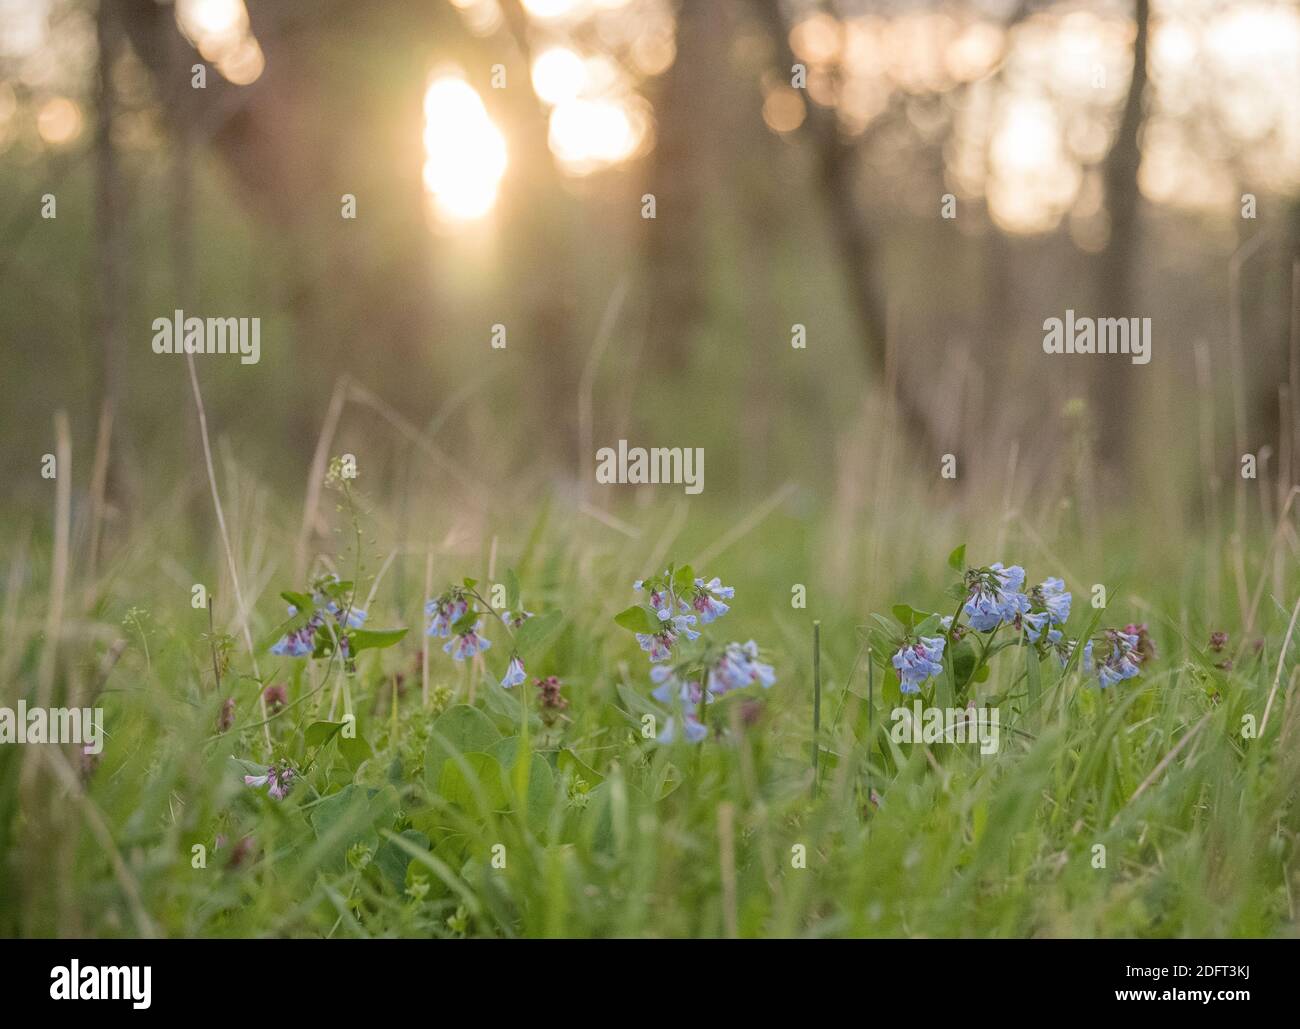 Virginia bluebells or Mertensia virginica bloom in springtime on the forest floor. Stock Photo